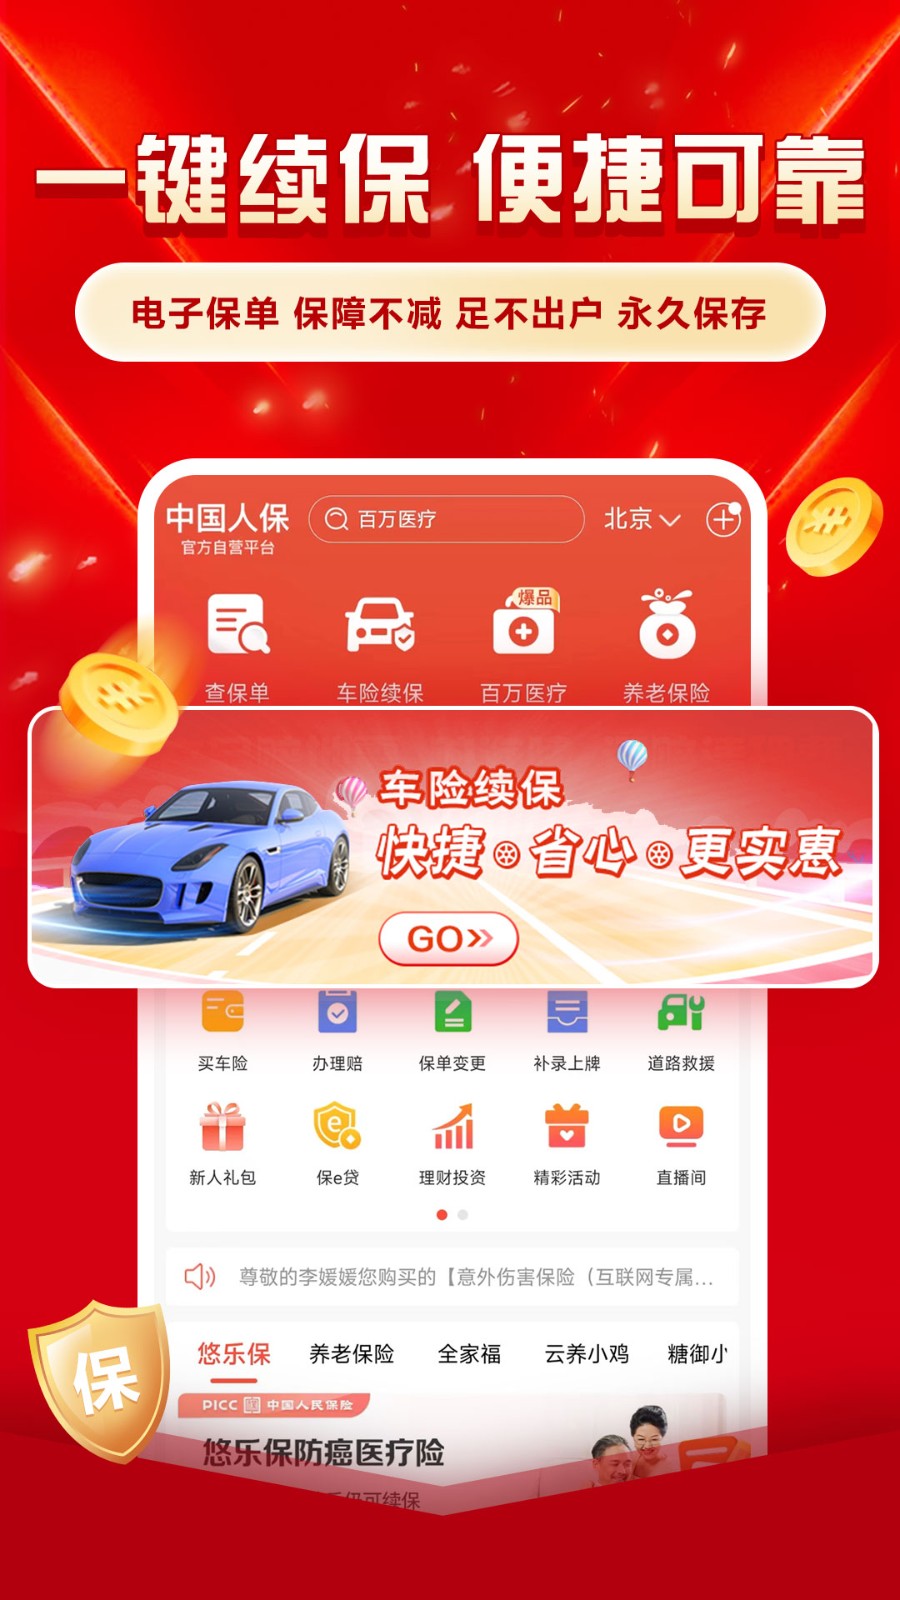 picc中国人民财产保险app(中国人保) v6.22.6 官方安卓版 1